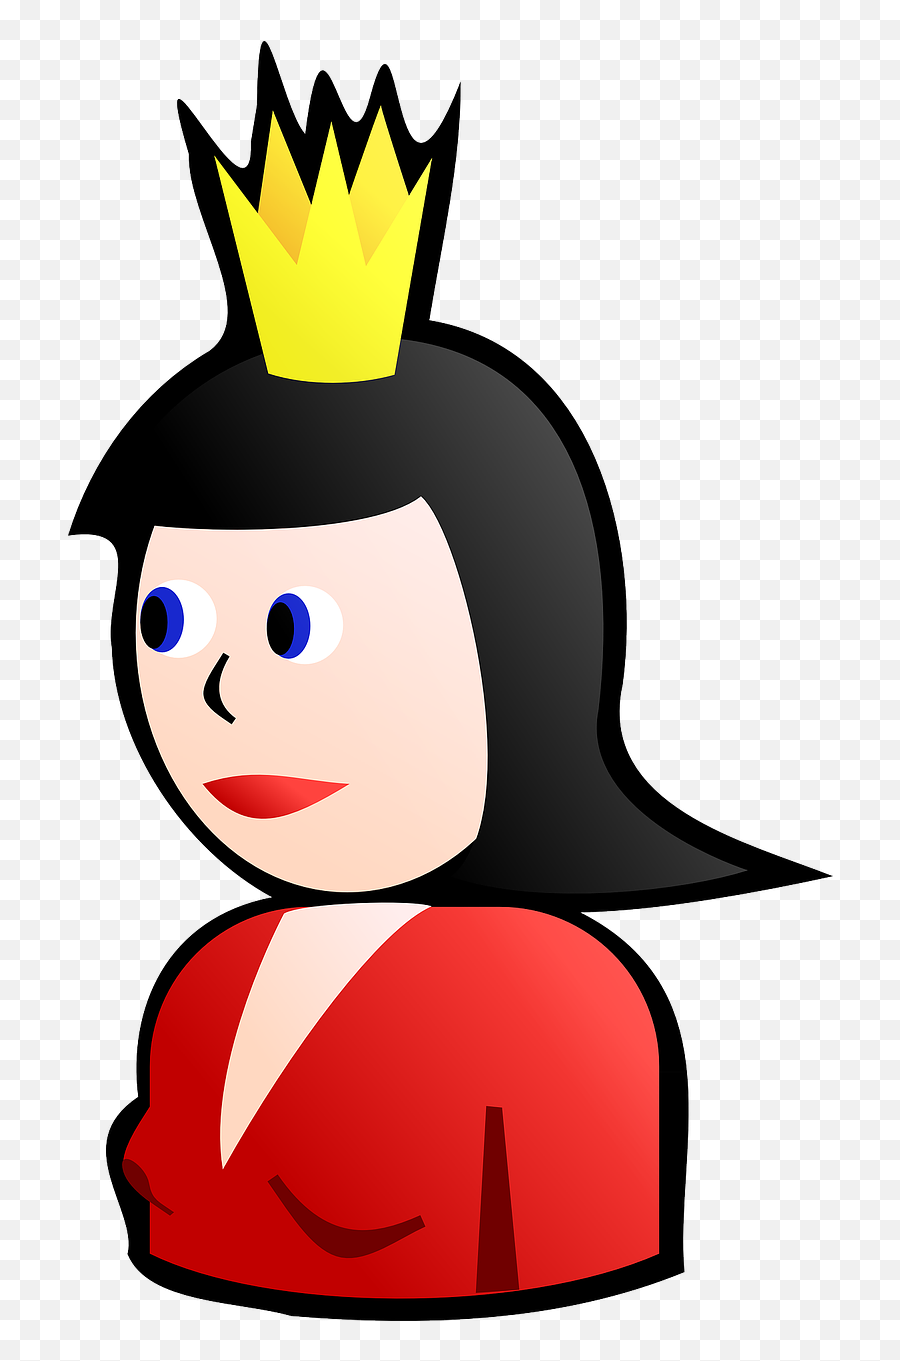 Blog U2013 Reflections U0026 Insights - Queen Clipart Emoji,Clker-free-vector-images Happy Face Emoticon